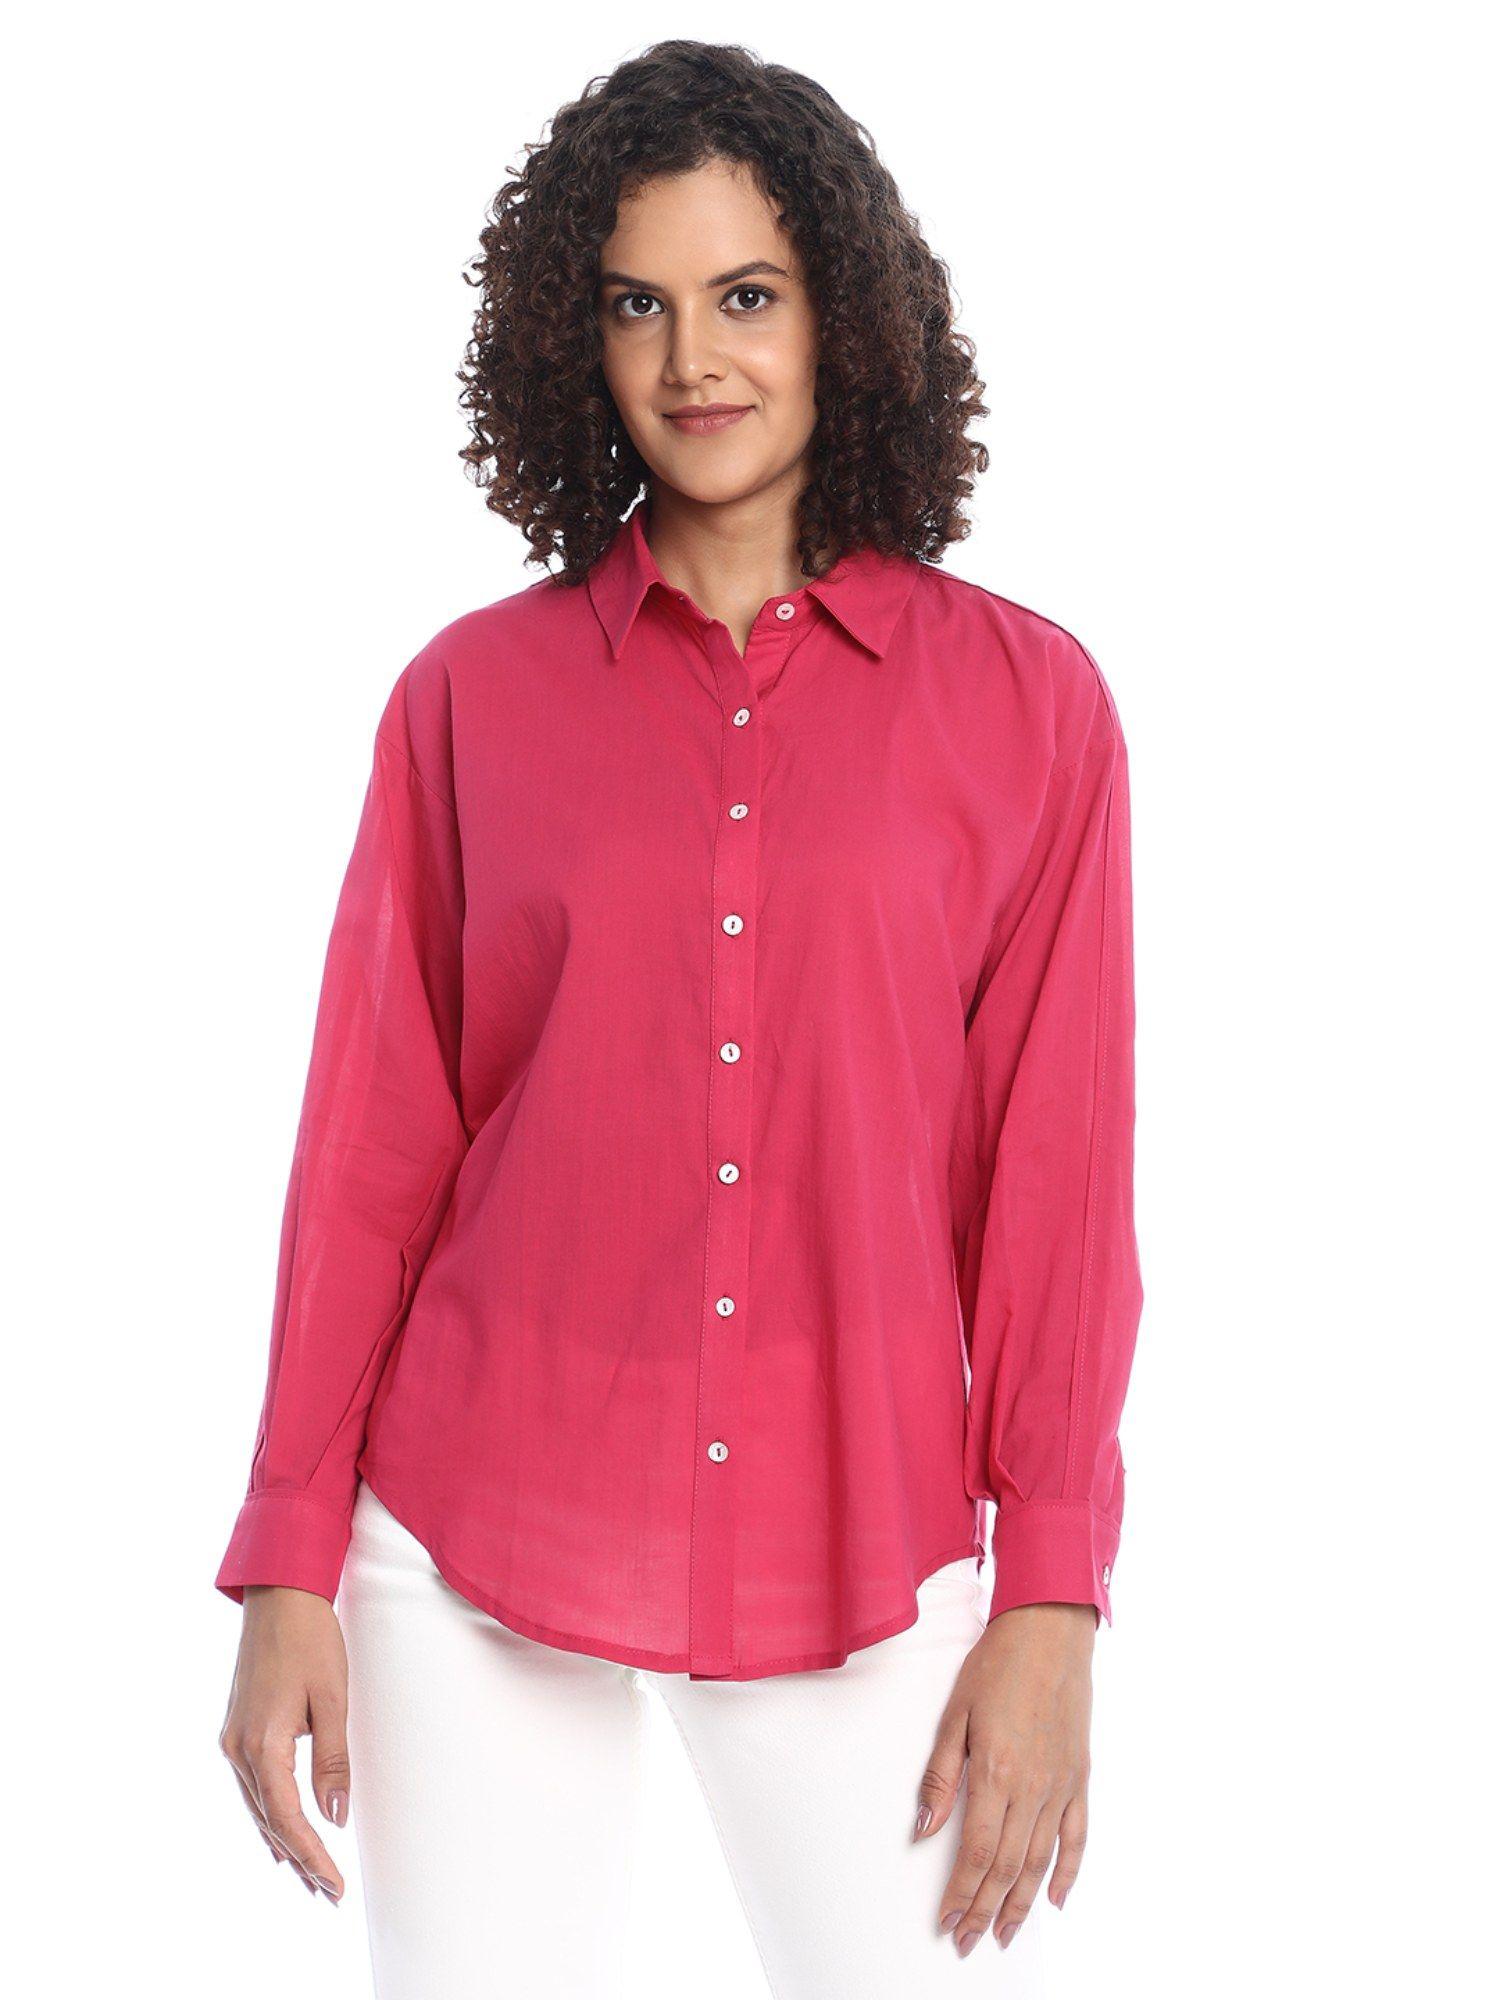 berry bright pink cotton drop shoulder shirt for women